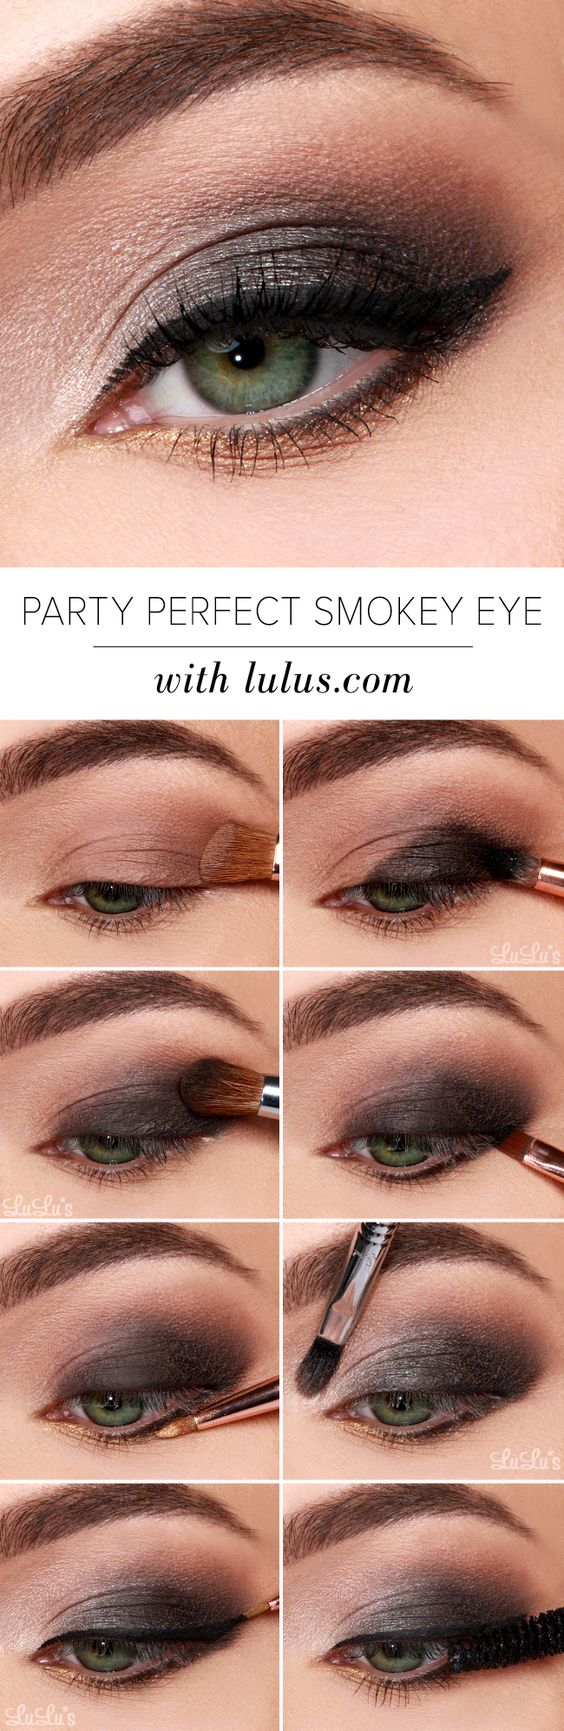 How To Do Classy Eye Makeup 40 Hottest Smokey Eye Makeup Ideas 2019 Smokey Eye Tutorials For